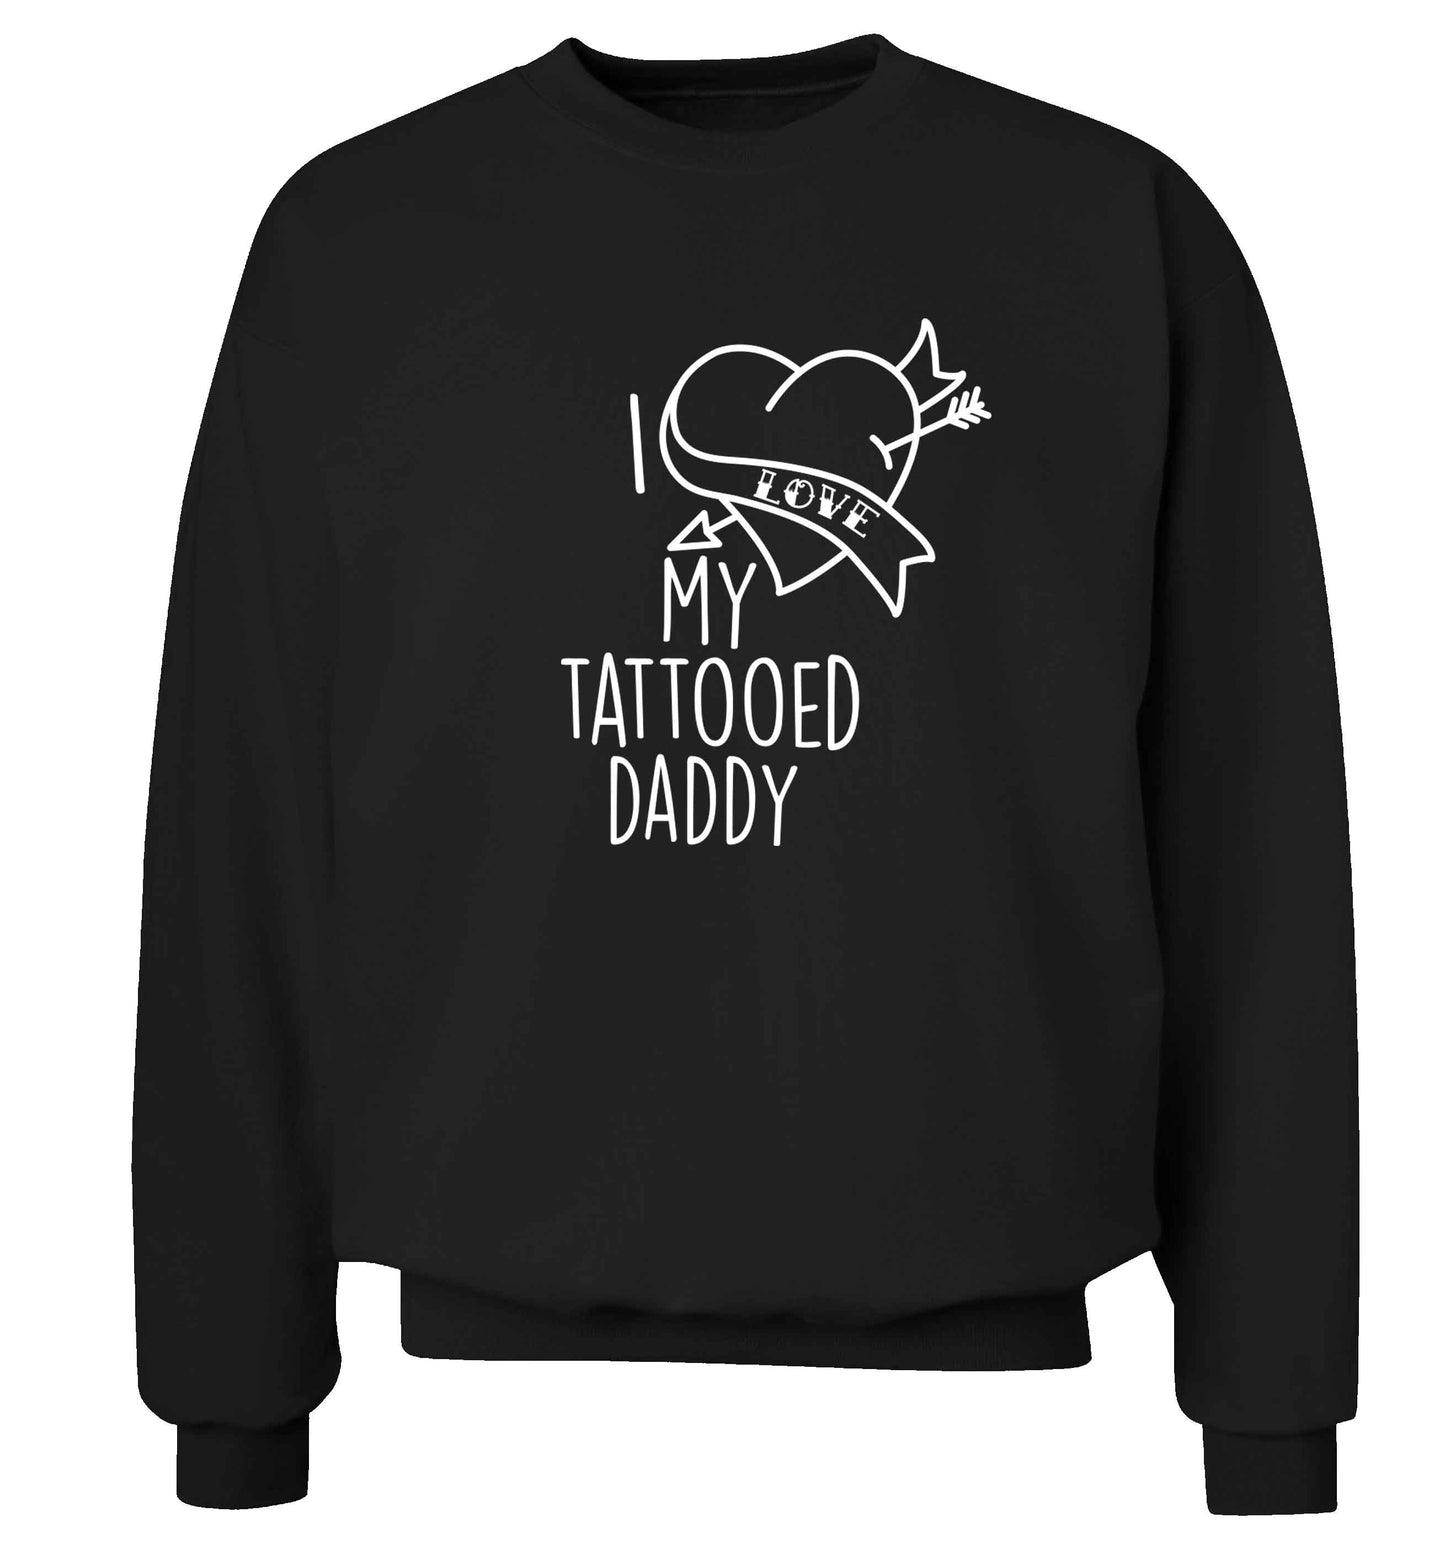 I love my tattooed daddy adult's unisex black sweater 2XL